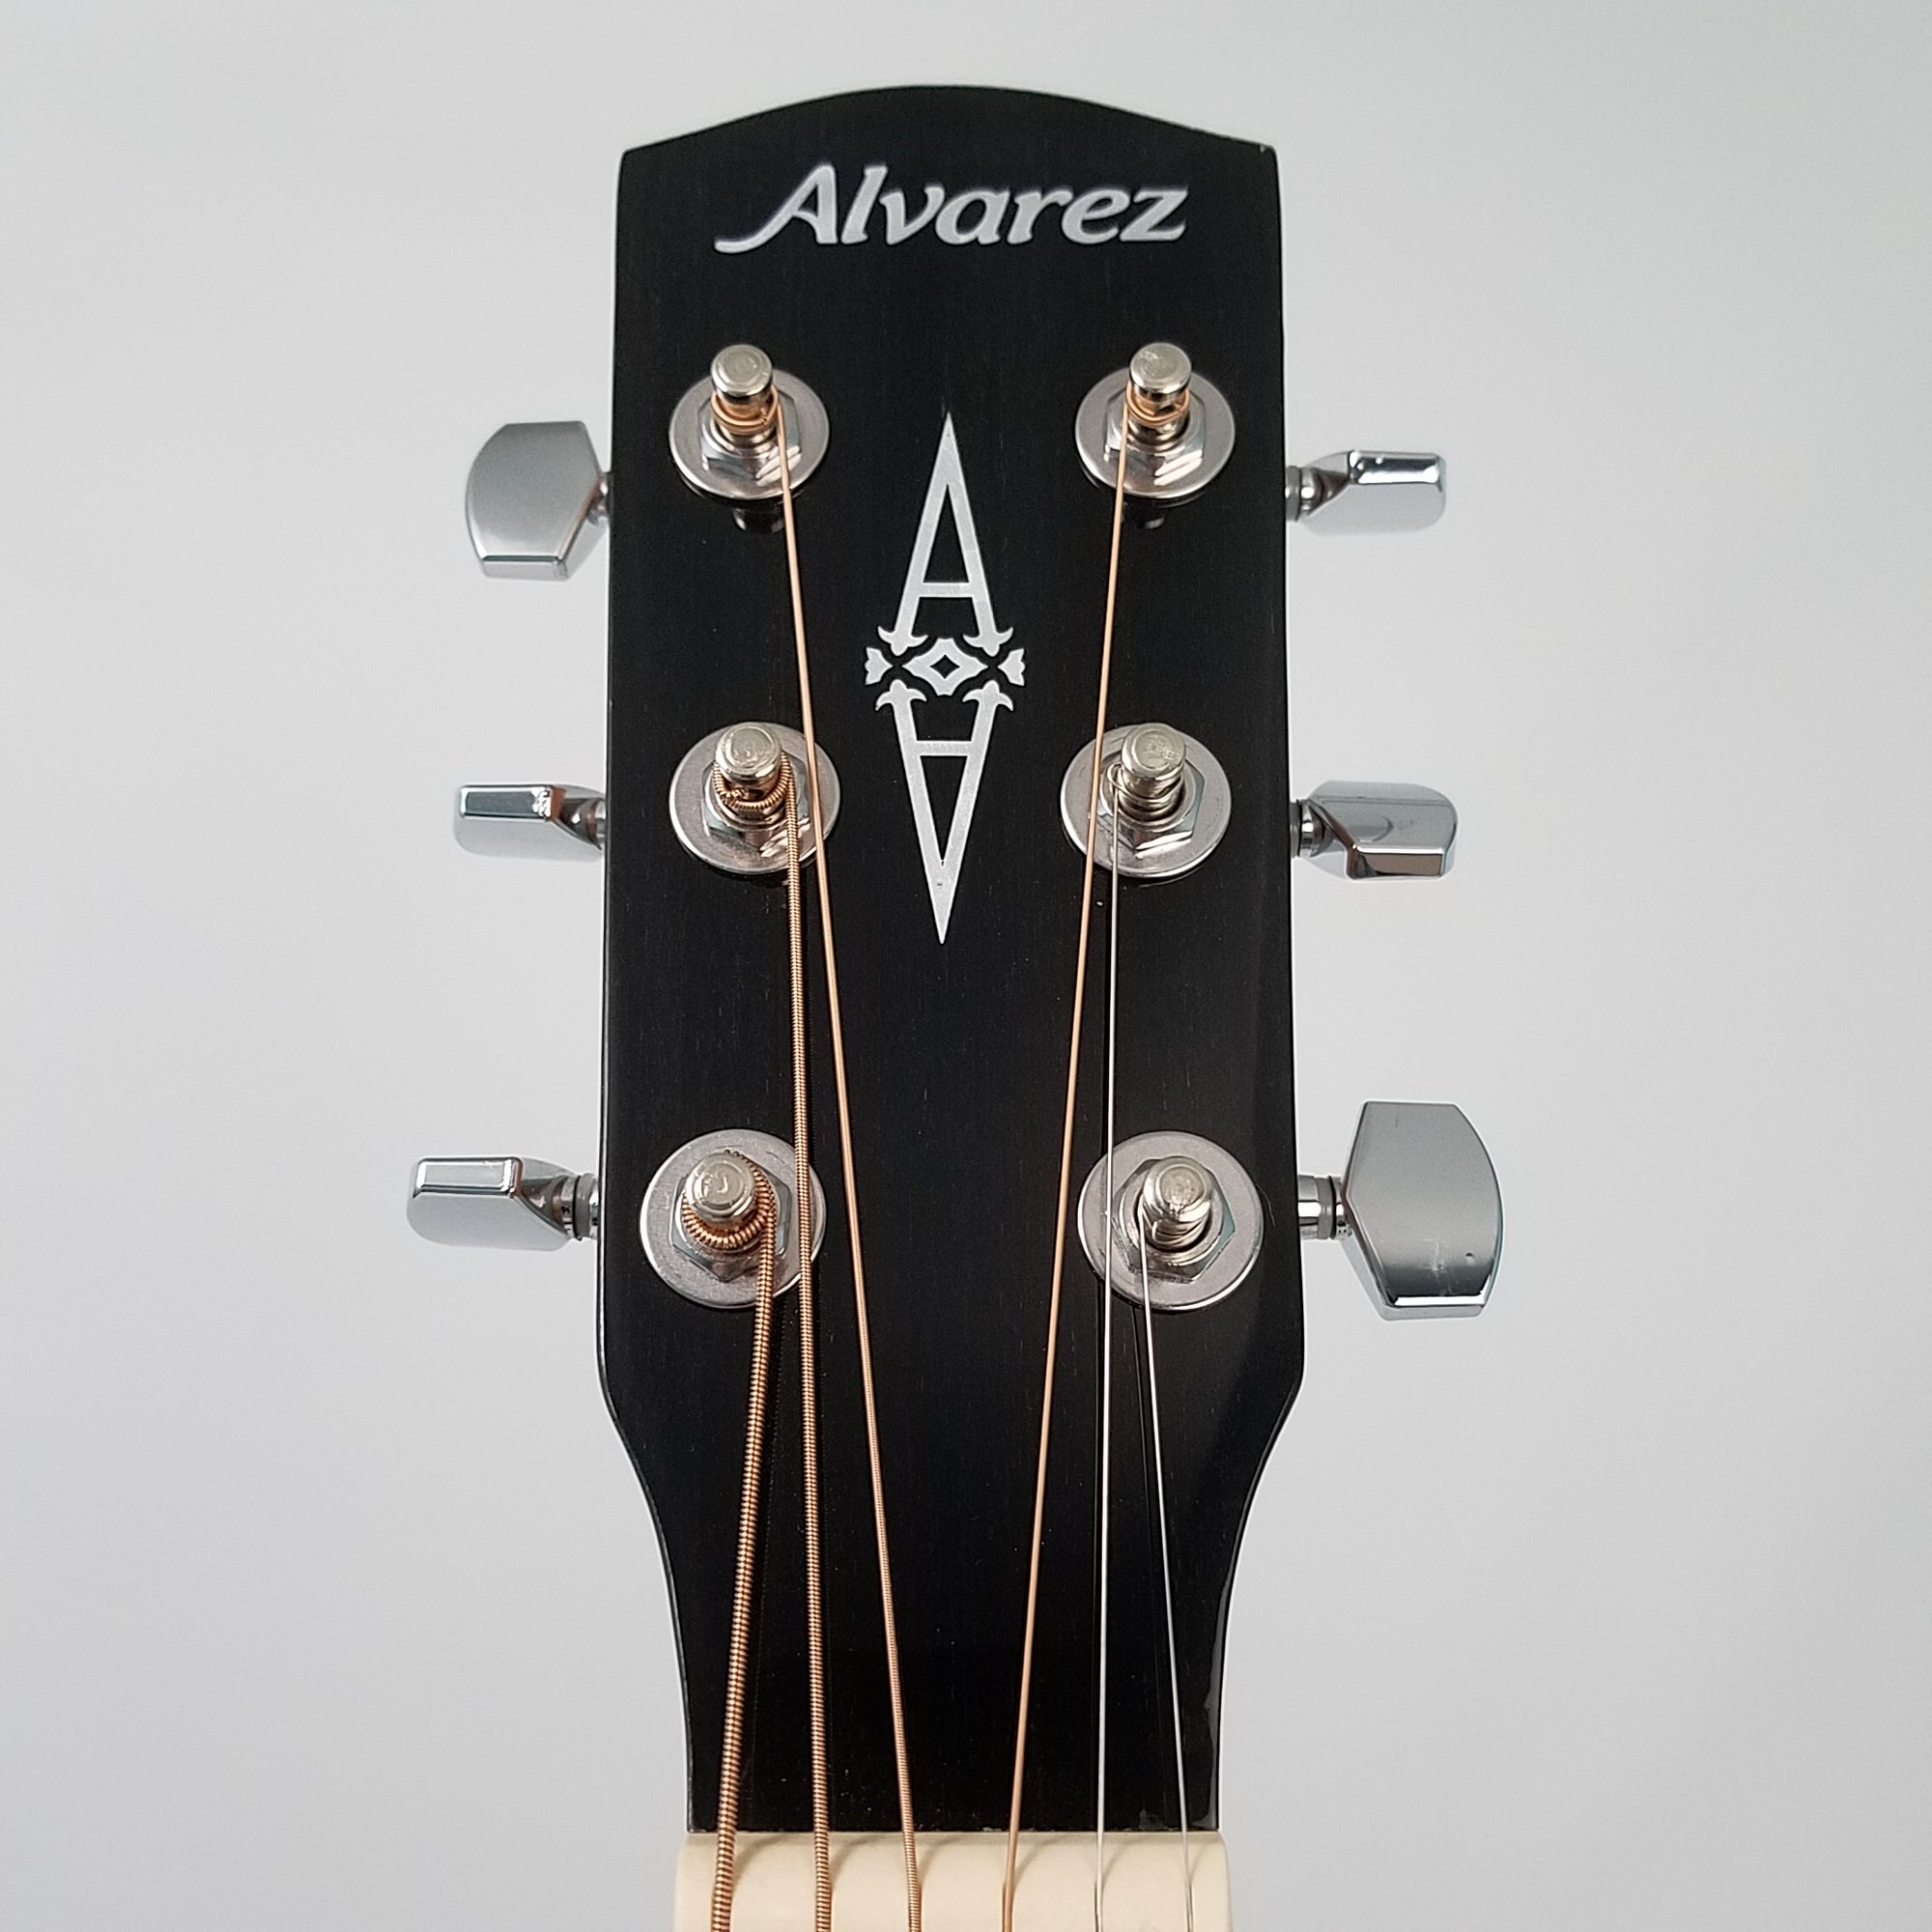 Alvarez Regent RD26CESB Acoustic Electric Sunburst Guitar with Gigbag